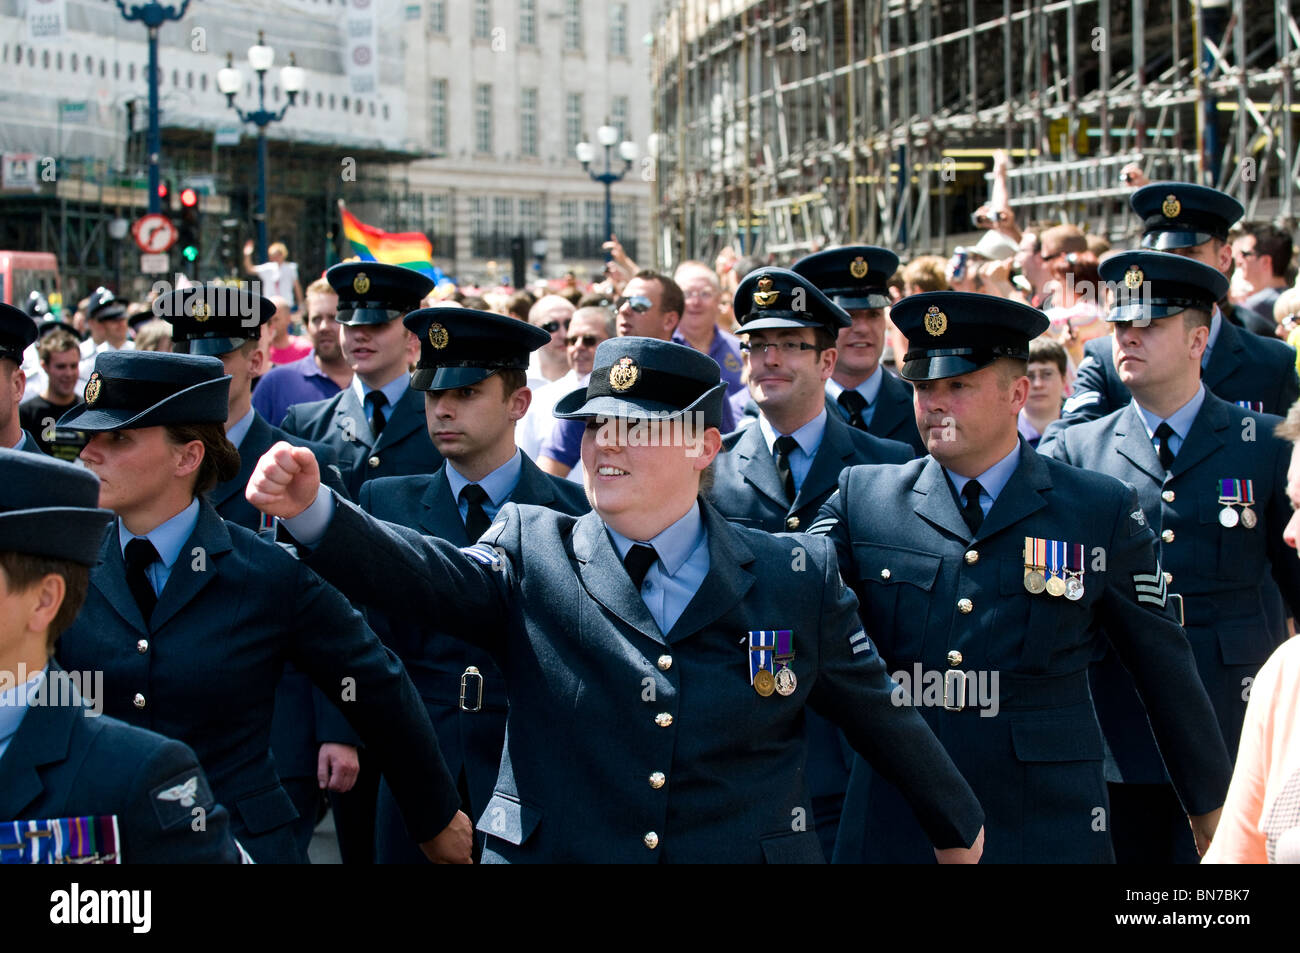 Royal Air Force marschieren an der Pride London feiern. Stockfoto